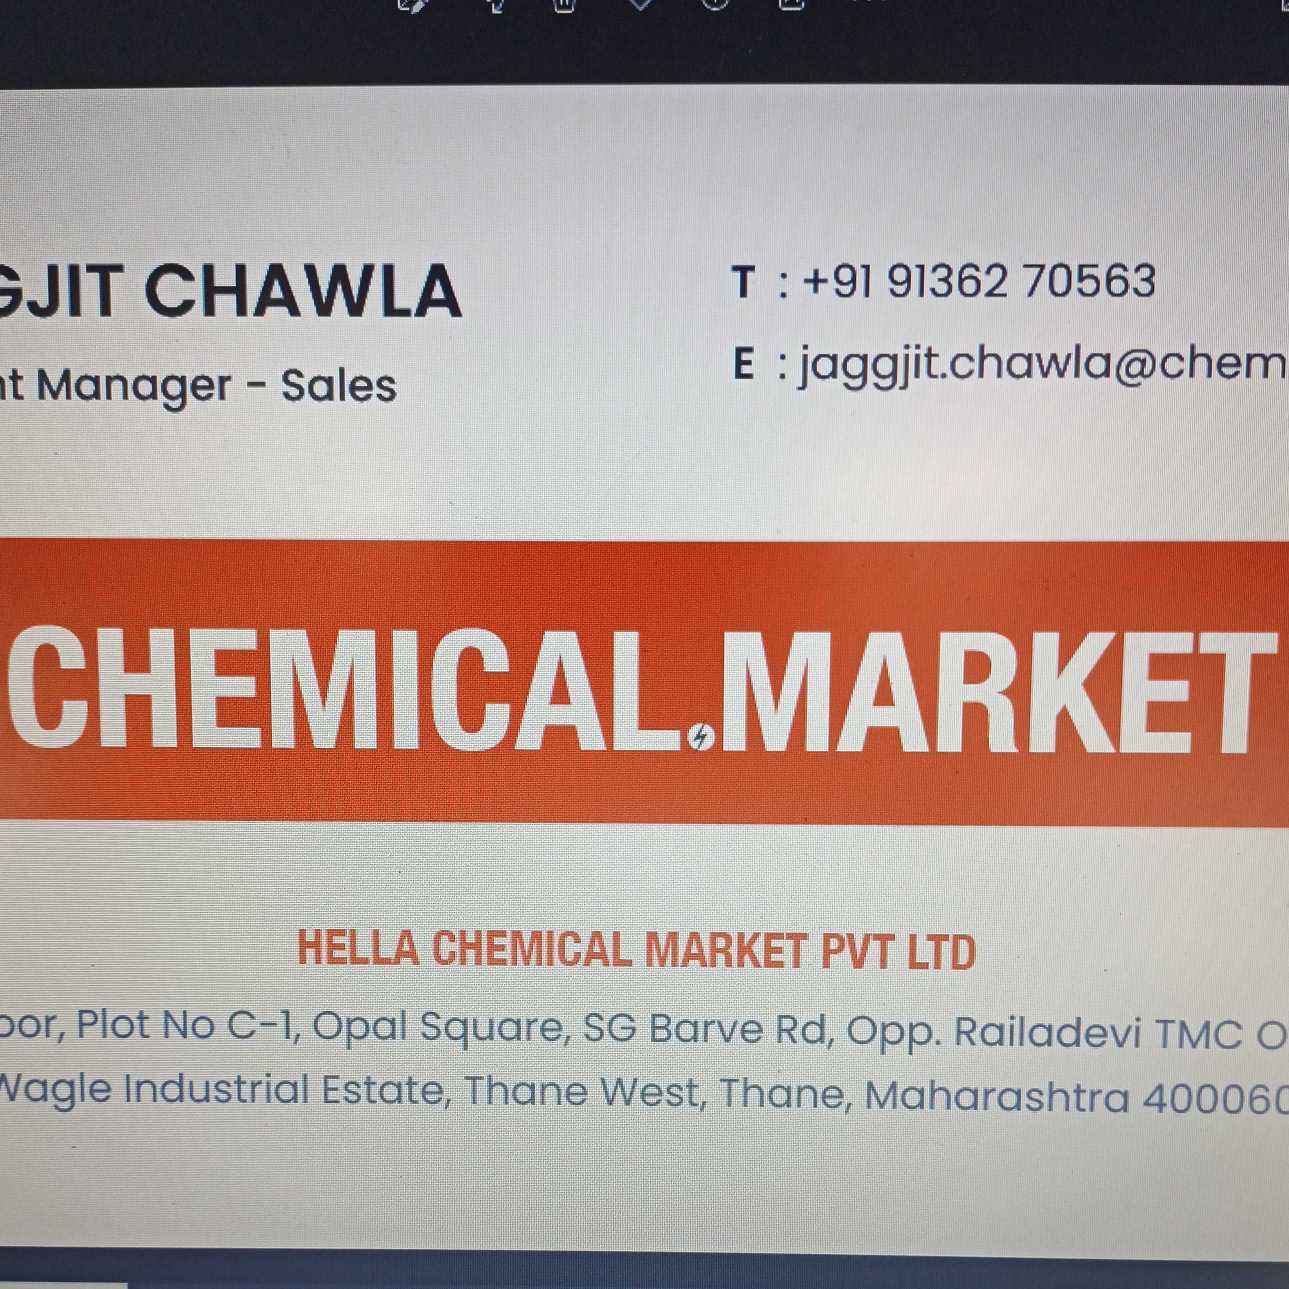 Jaggjit Chawla Hella Chemical Market Private Limited maharashtra india Plastic4trade